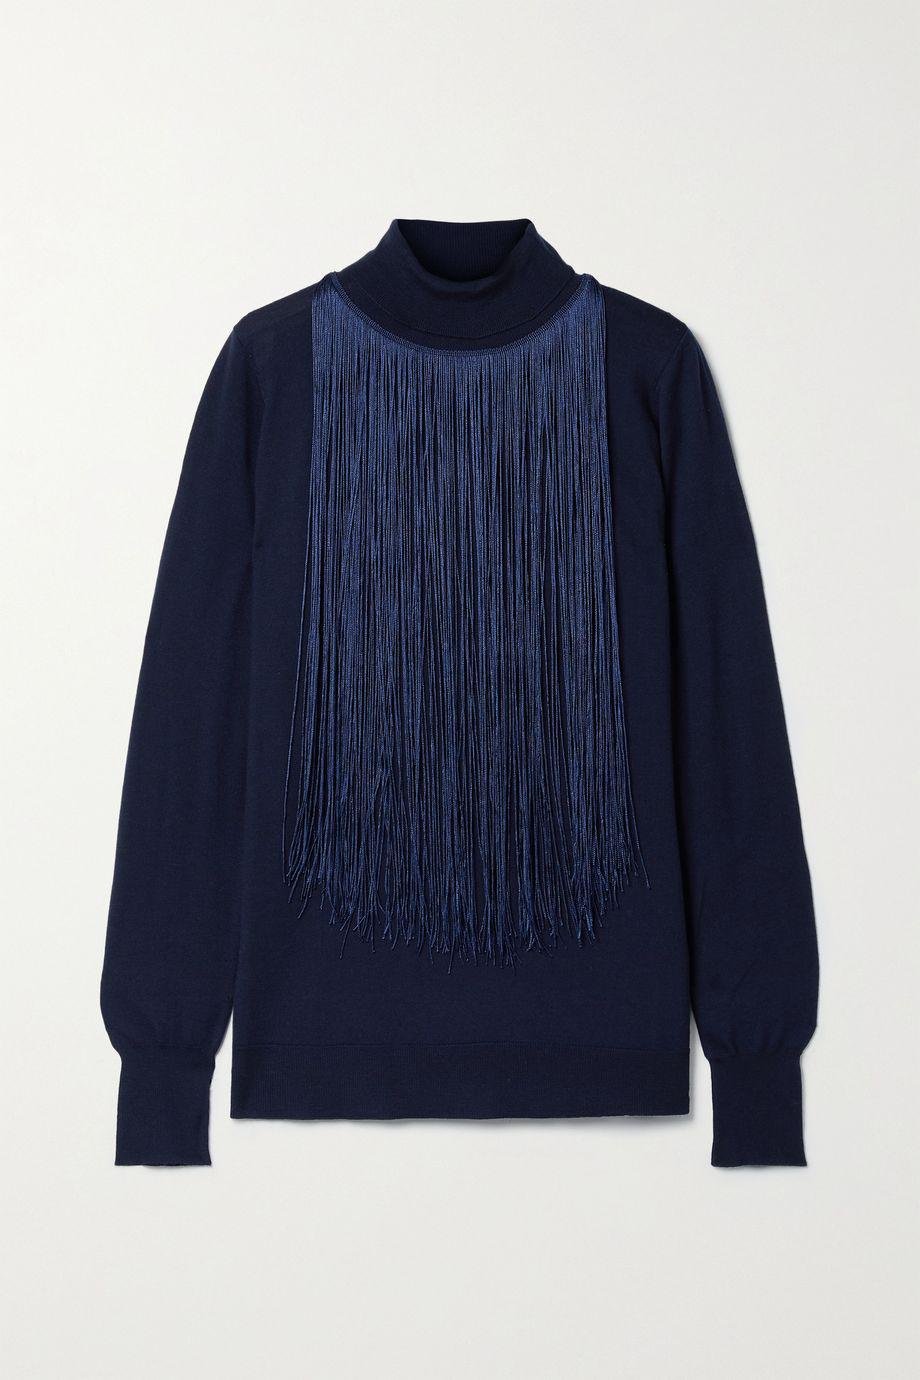 Fringed merino wool turtleneck sweater by CHRISTOPHER KANE